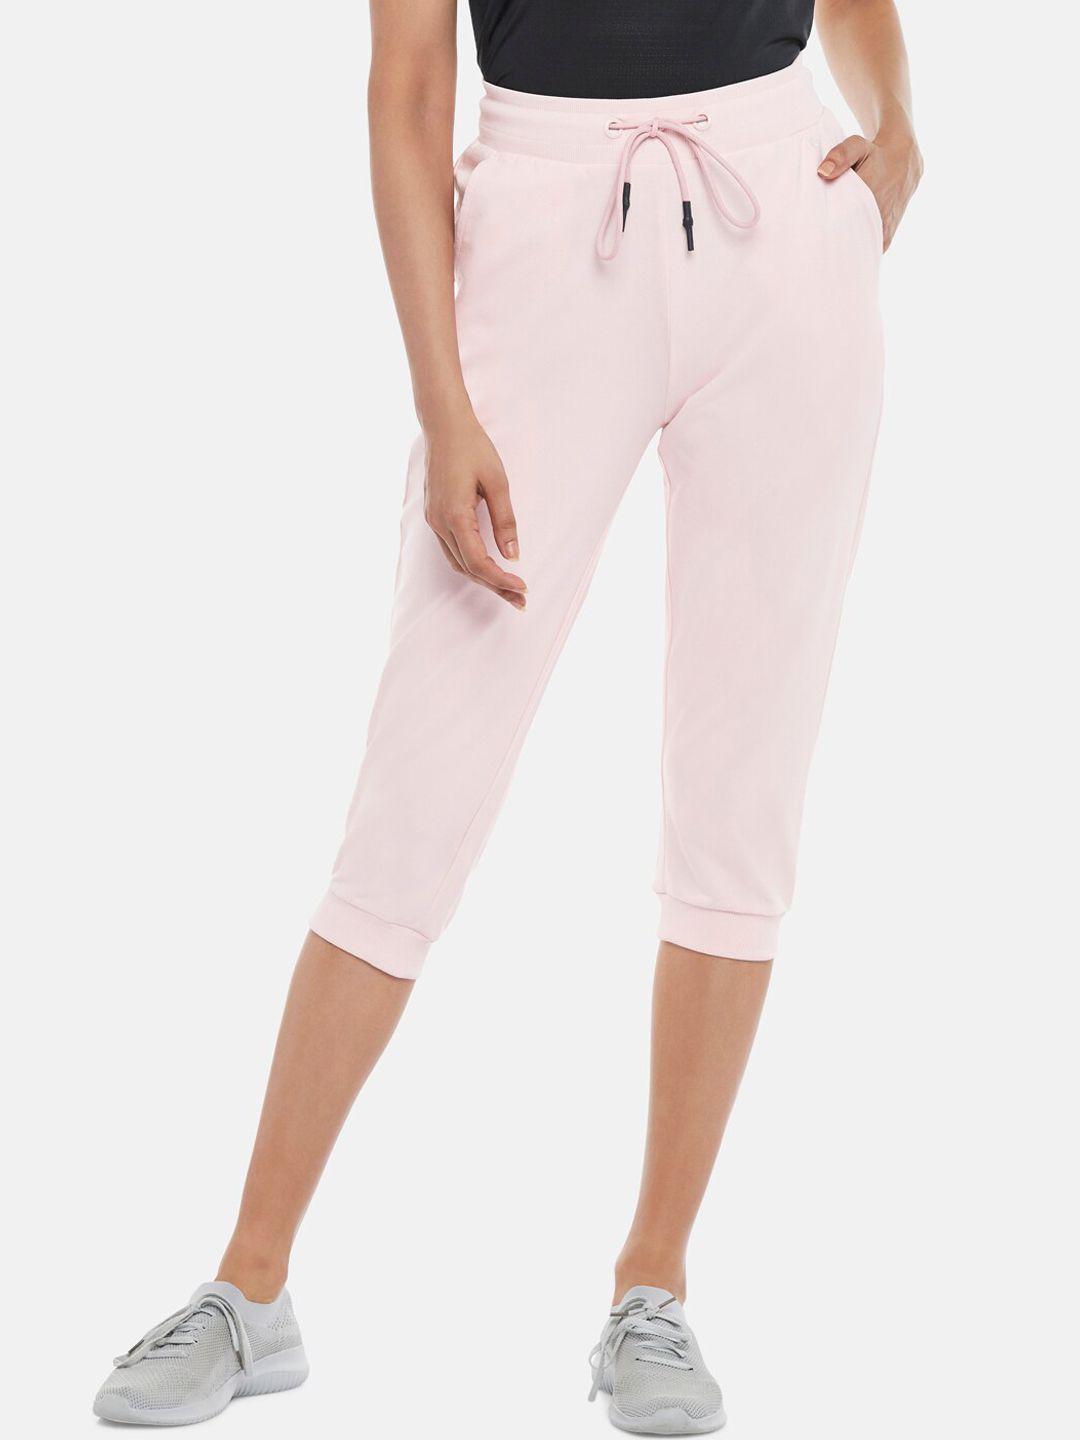 ajile by pantaloons women pink capris